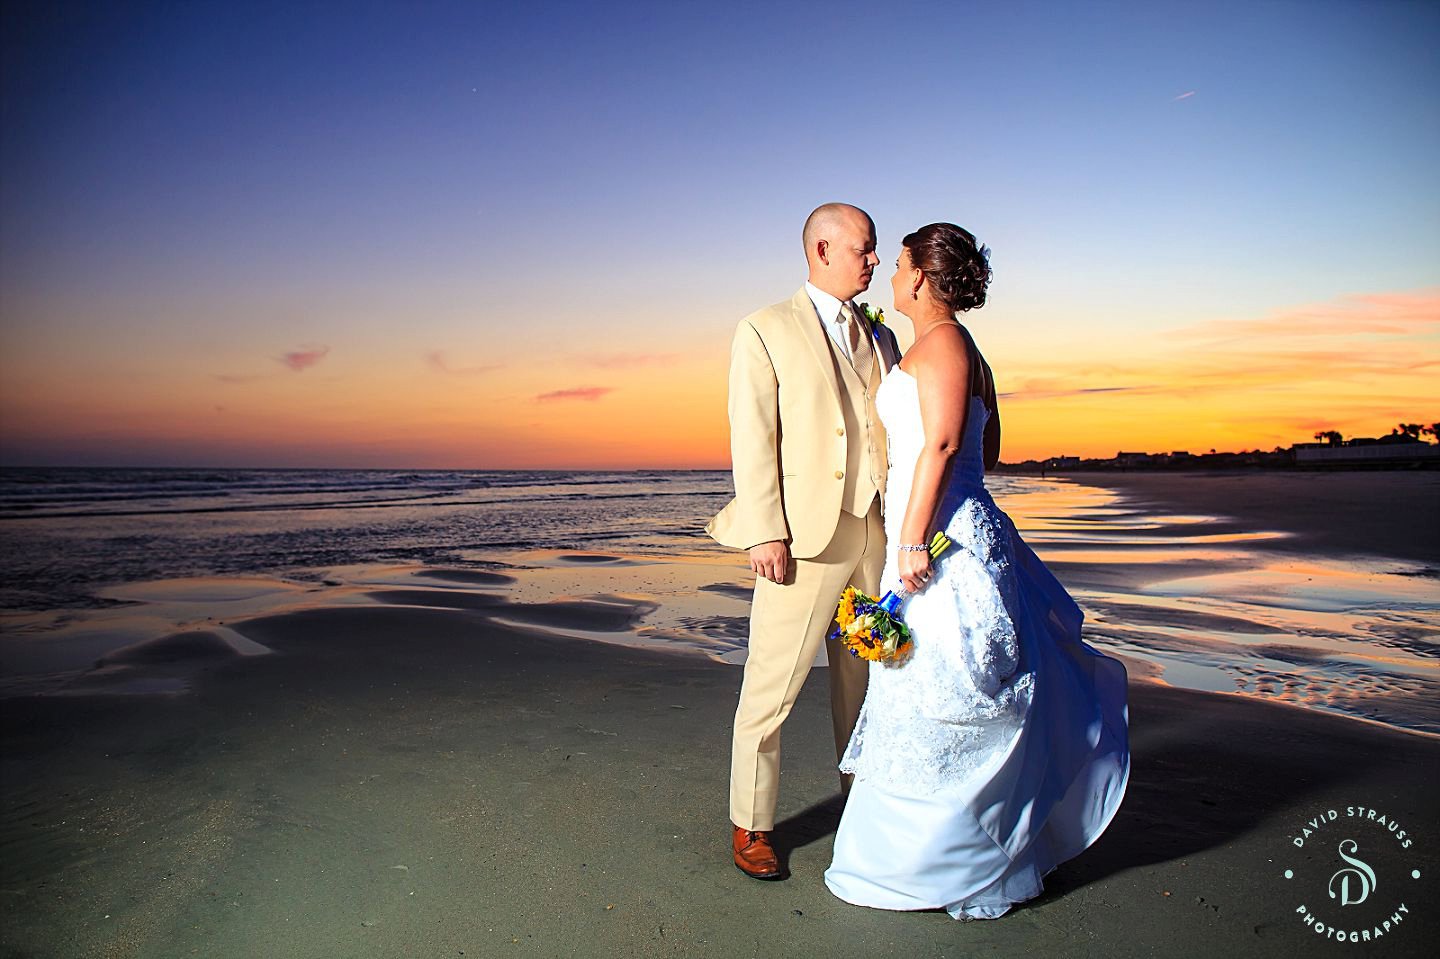 beautiful sunset - Folly Beach Wedding Photography - Brenna and David